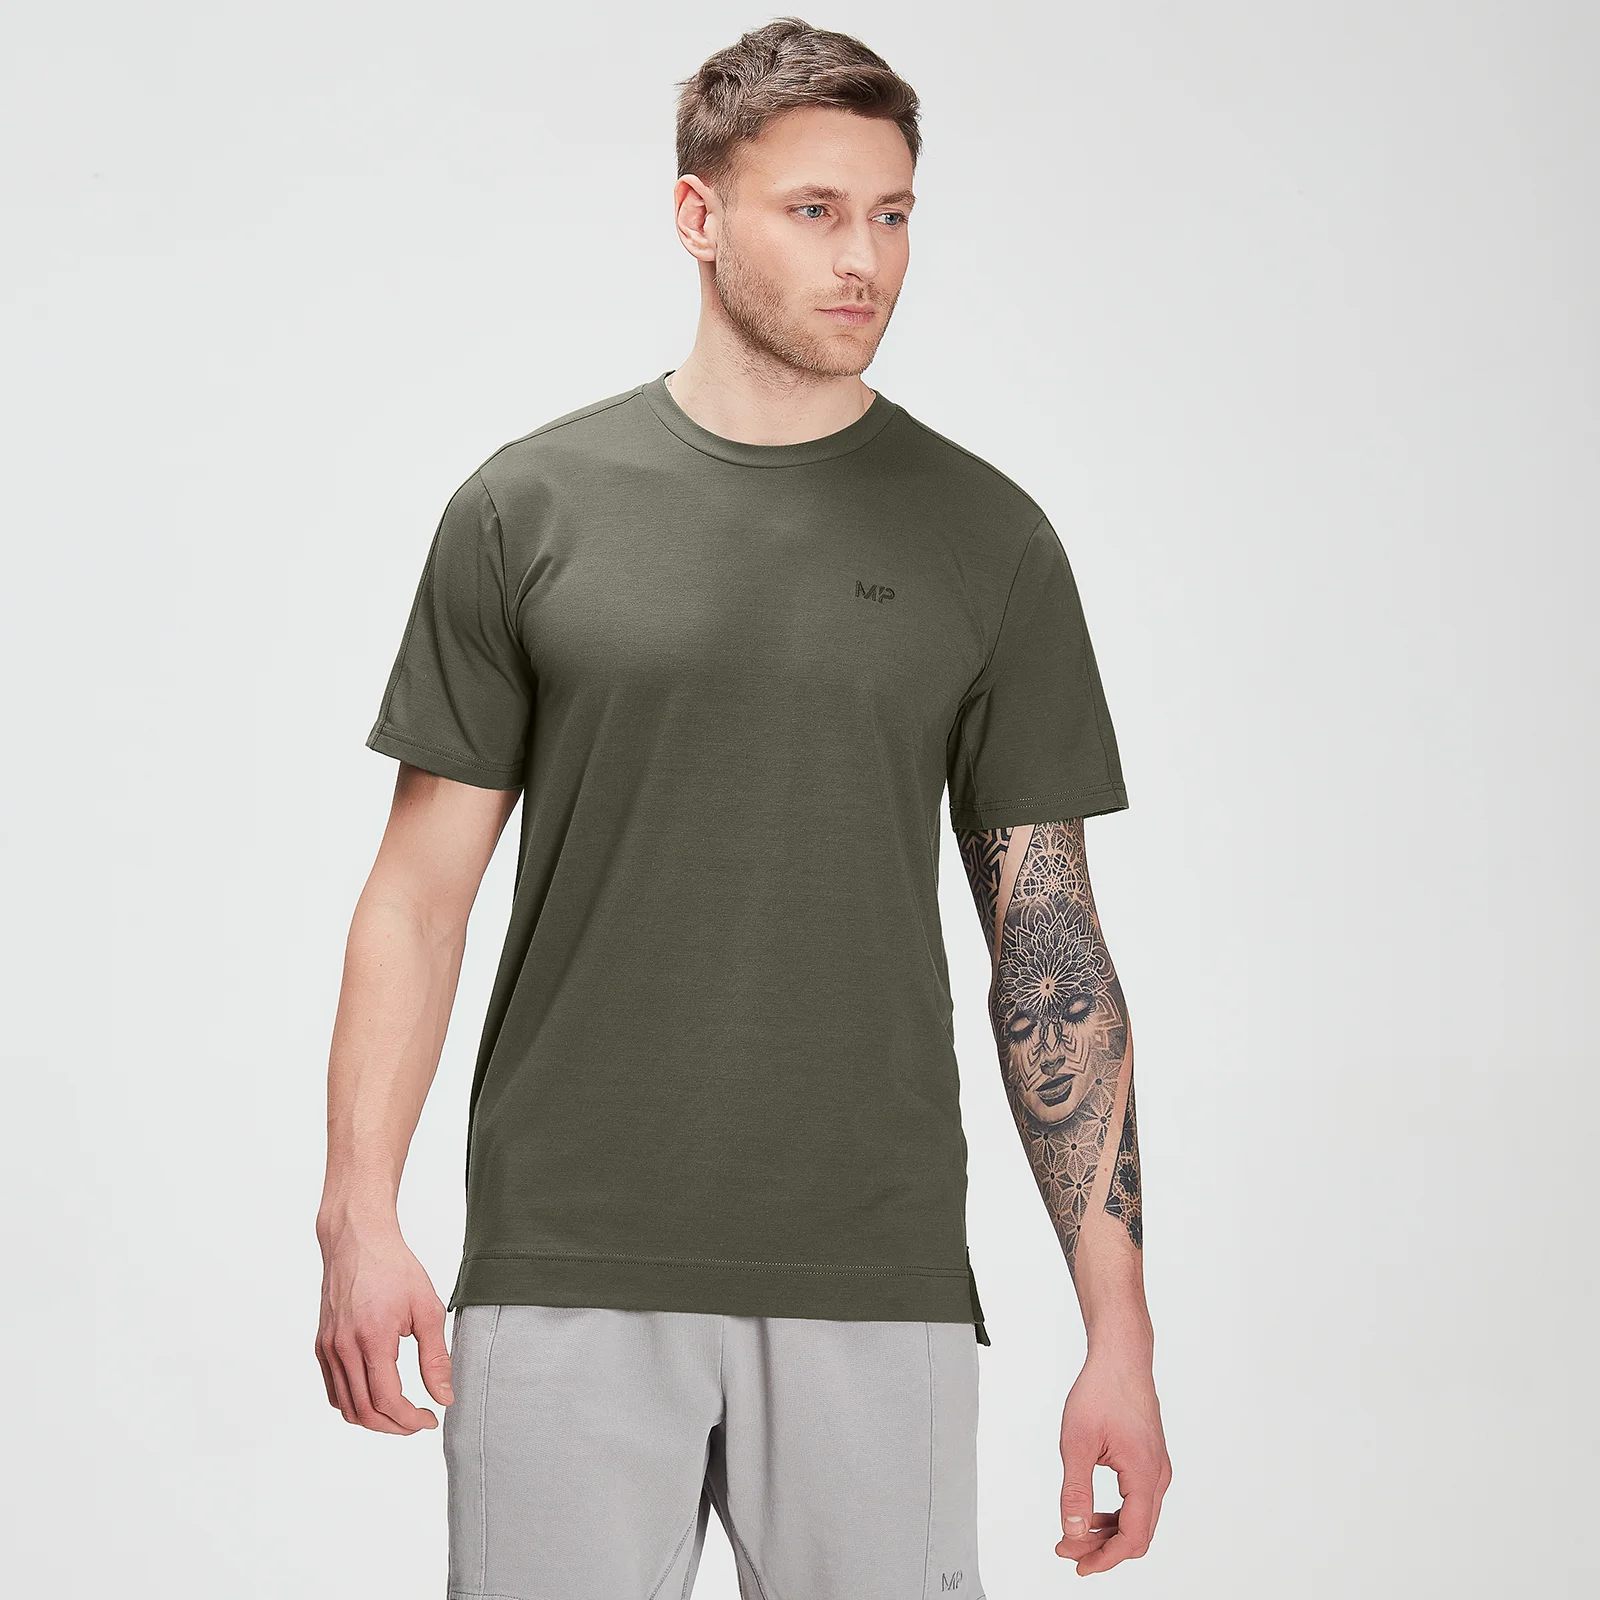 MP Men's Training drirelease® Short Sleeve T-shirt – Dark Olive Image 1